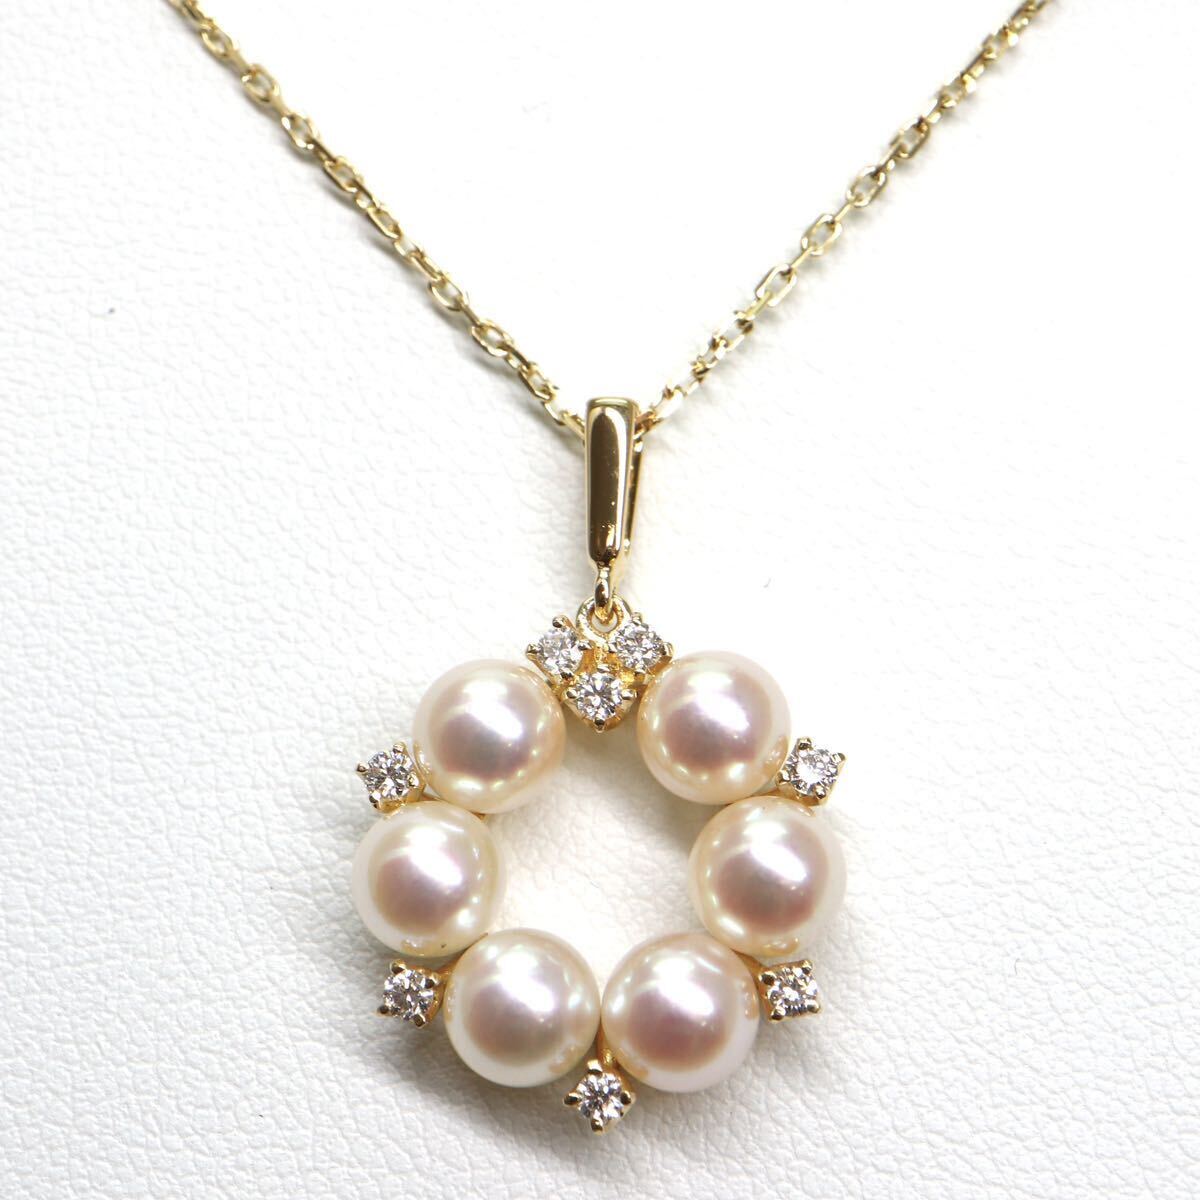 MIKIMOTO(ミキモト)良質!!《K18 天然ダイヤモンド/アコヤ本真珠ネックレス》A 約4.8g 約38cm necklace diamond jewelry ジュエリー EE8/EE8の画像1